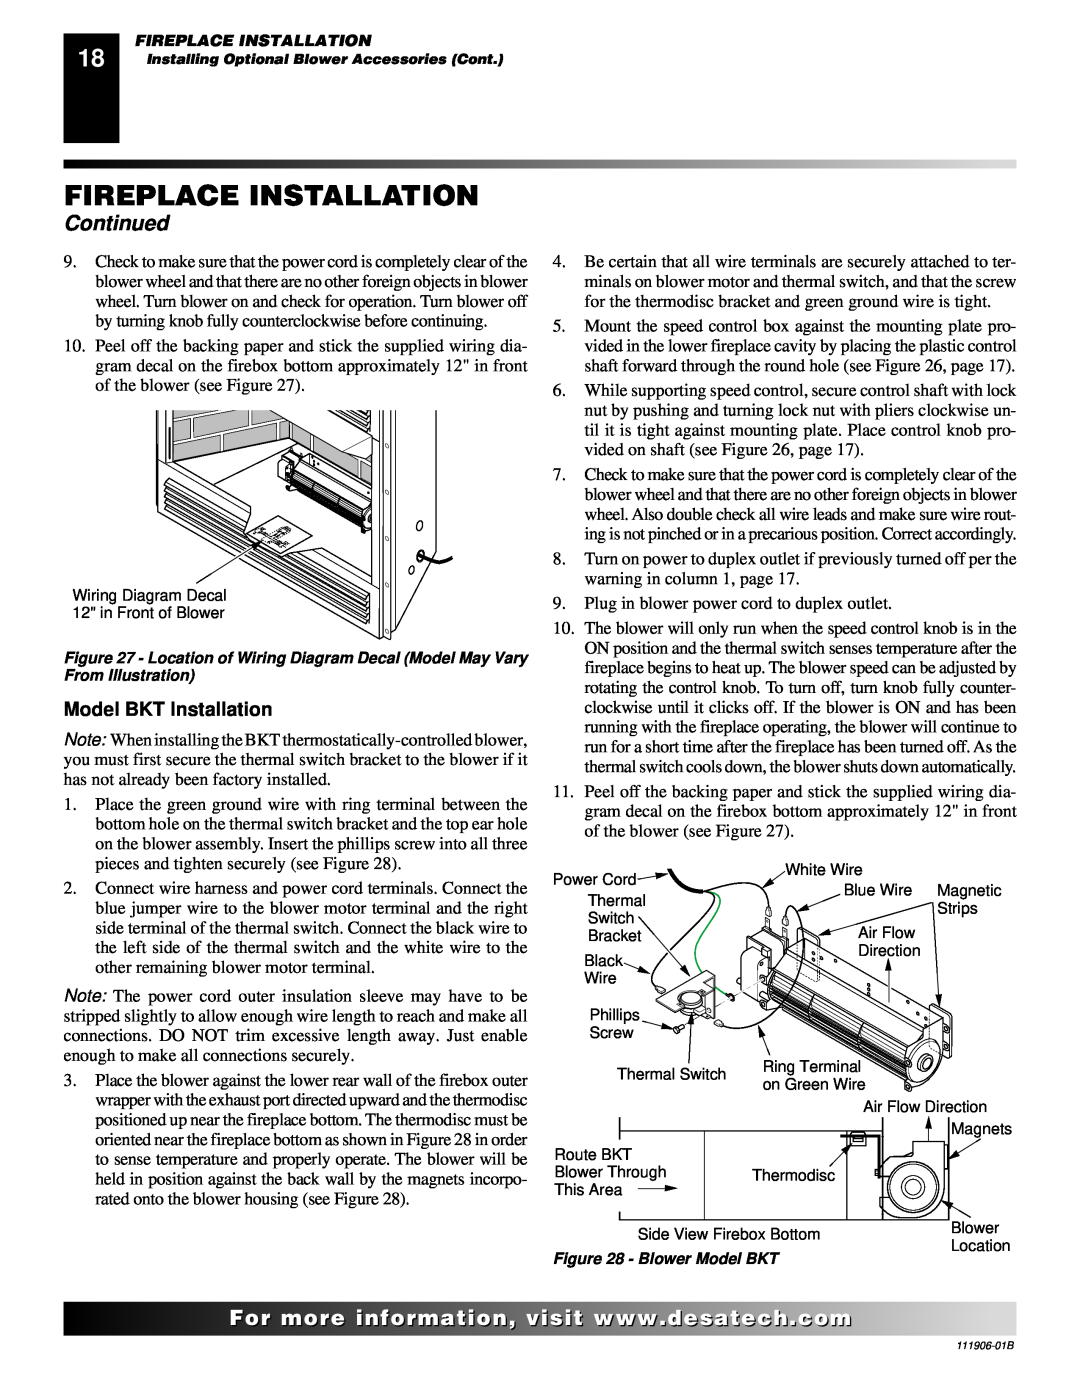 Desa (V)V42PA(1), CHDV42NRA installation manual Fireplace Installation, Continued, Model BKT Installation 